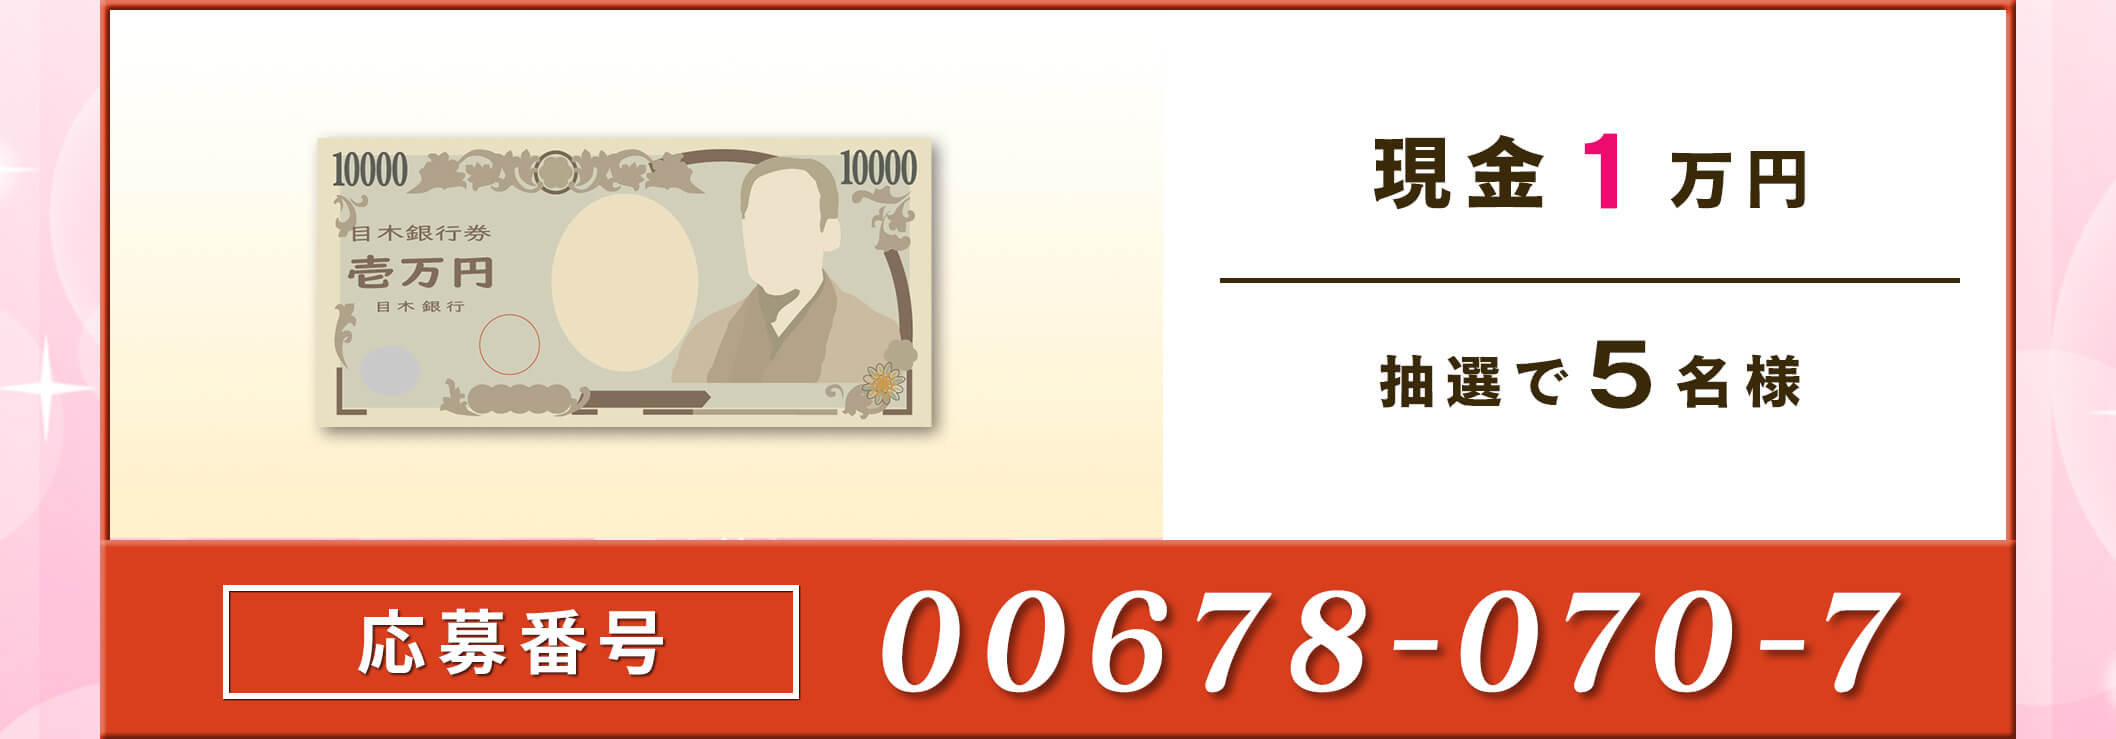 現金1万円 抽選で5名様 応募番号 00678-070-7